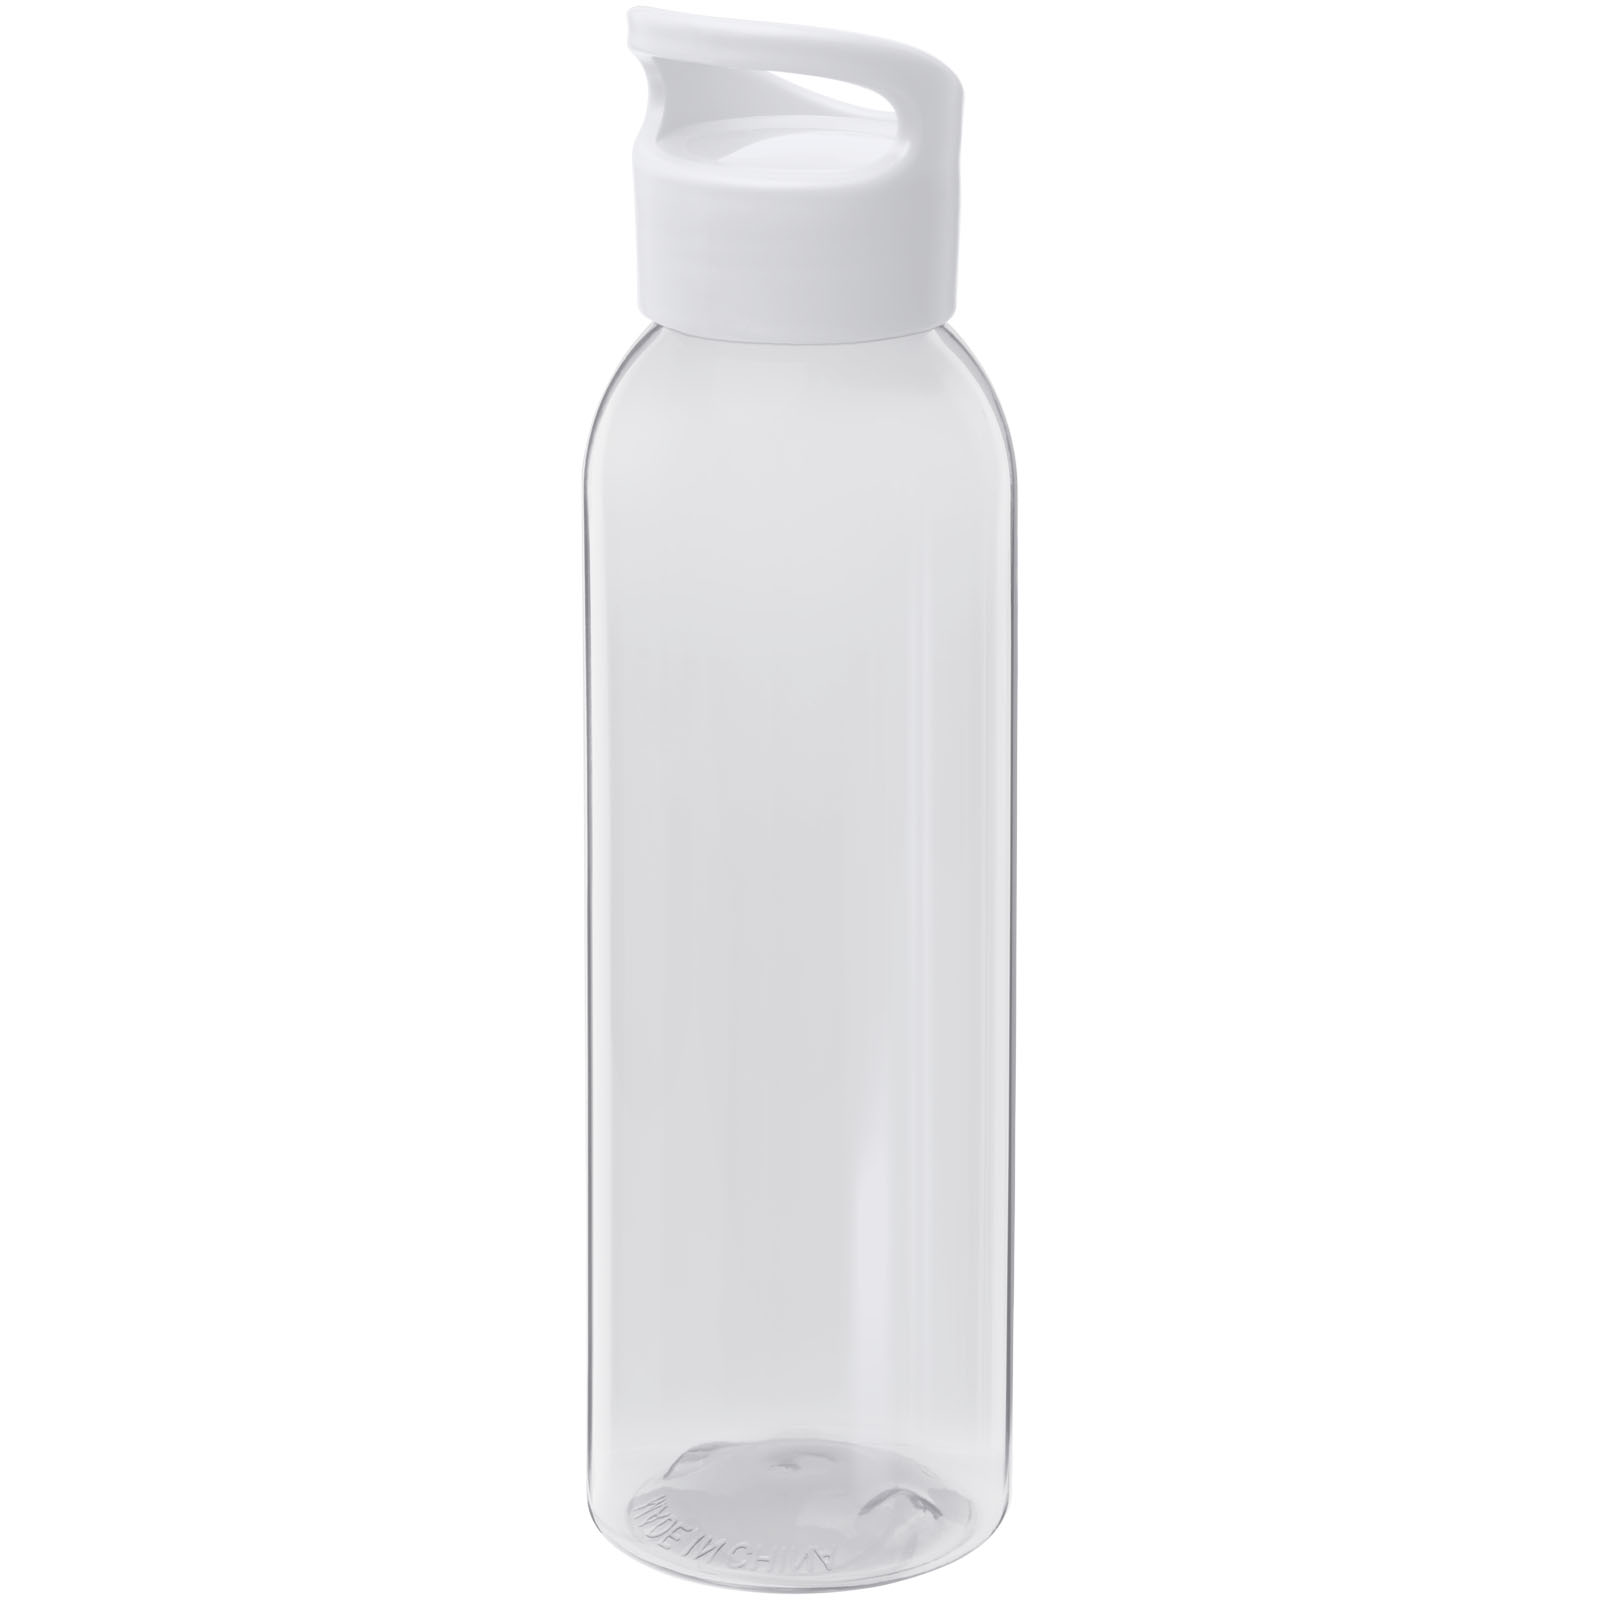 Advertising Water bottles - Sky 650 ml recycled plastic water bottle - 3